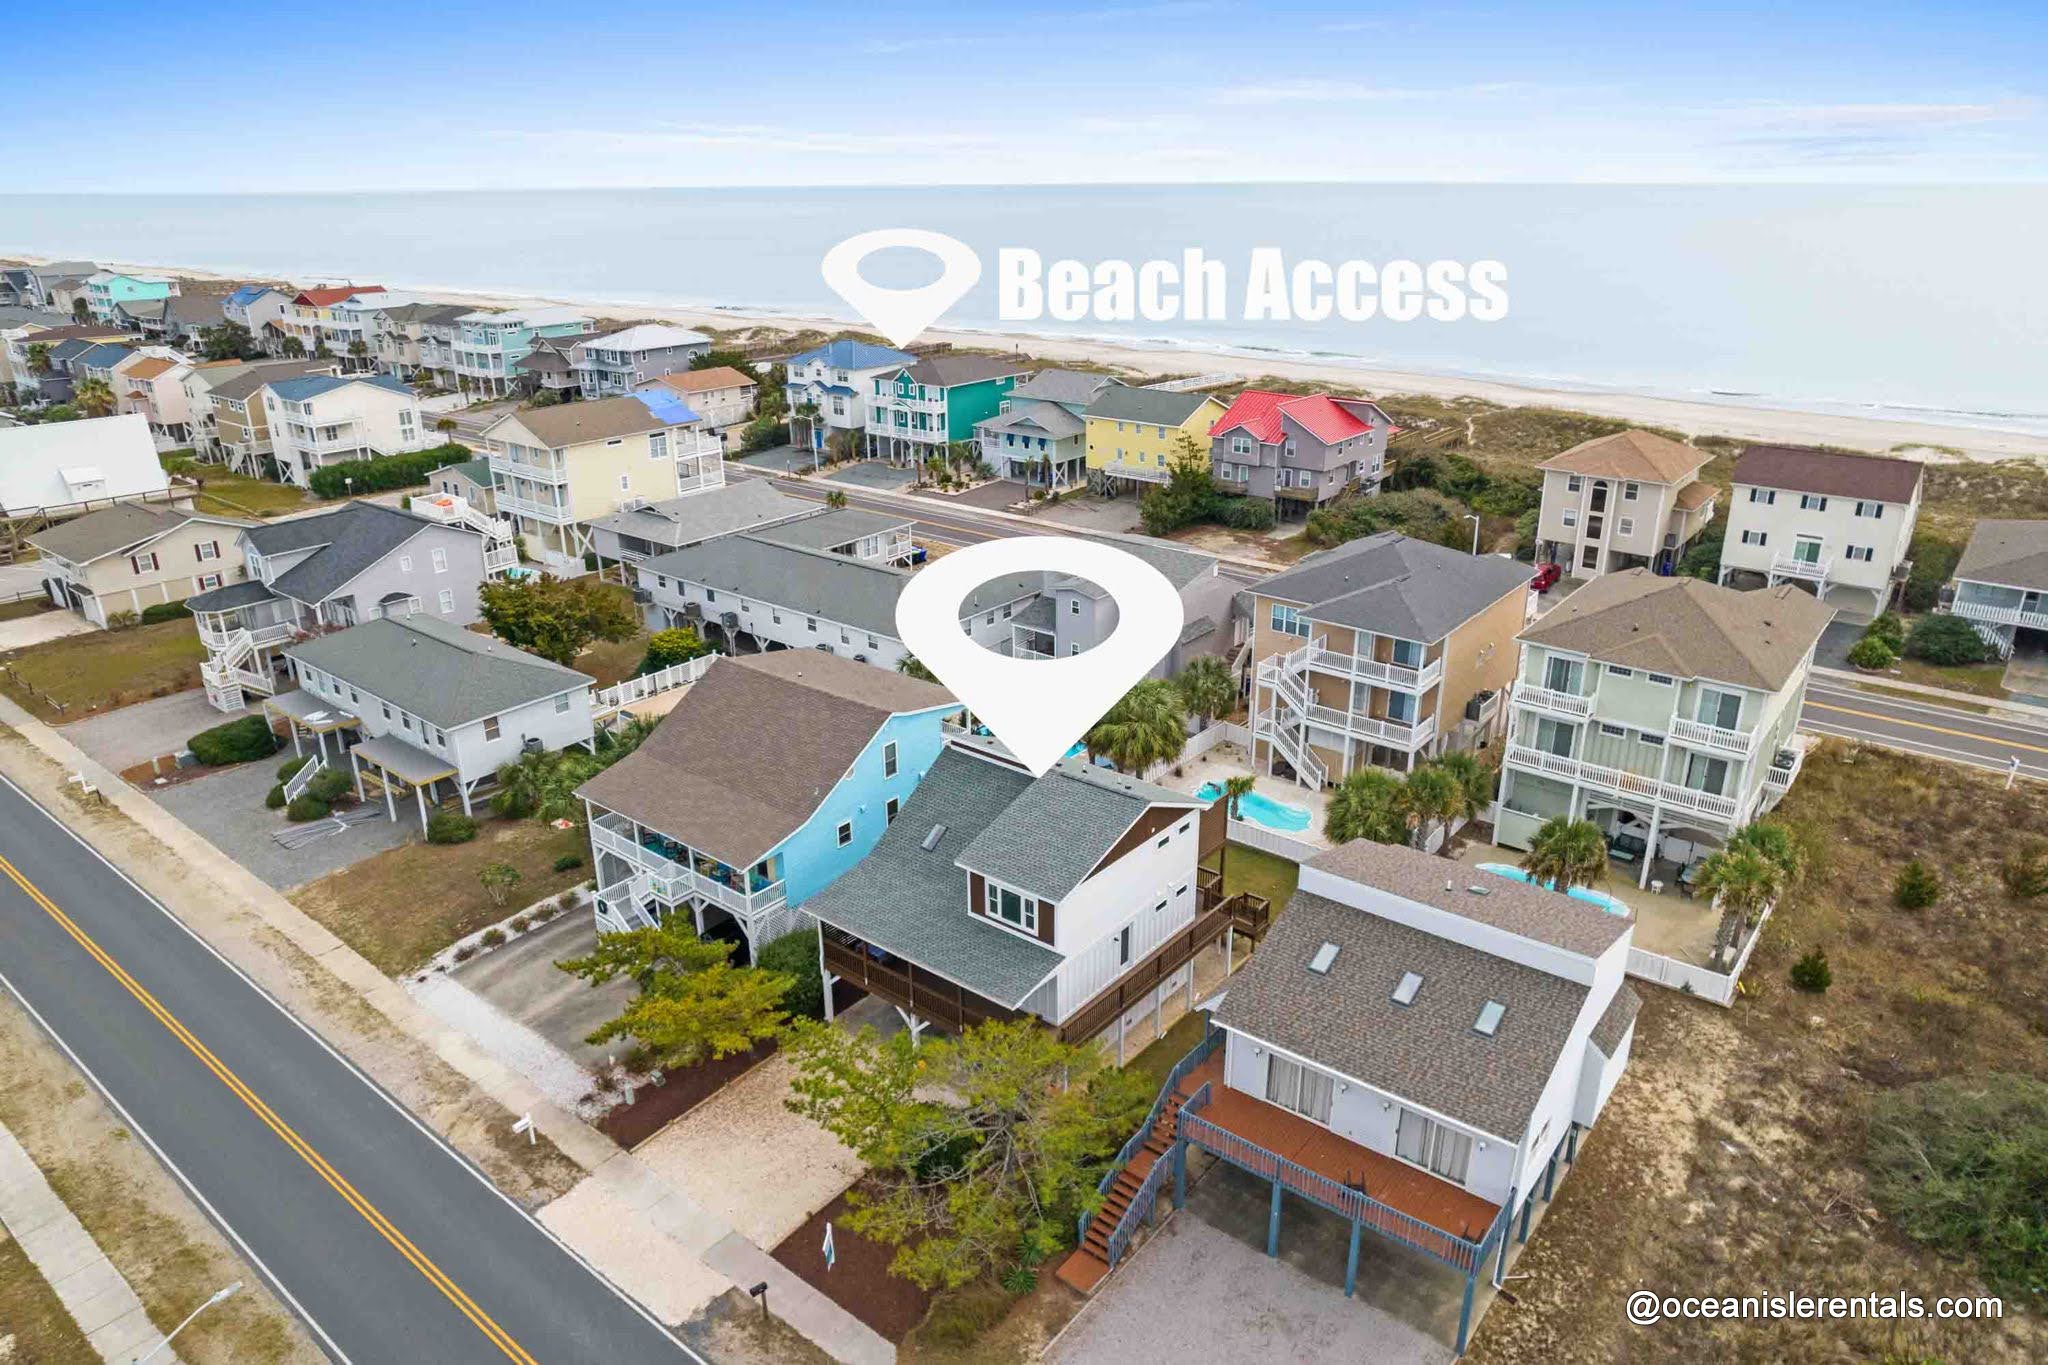 Ocean Isle Beach Vacation rental at 31 E. First St.